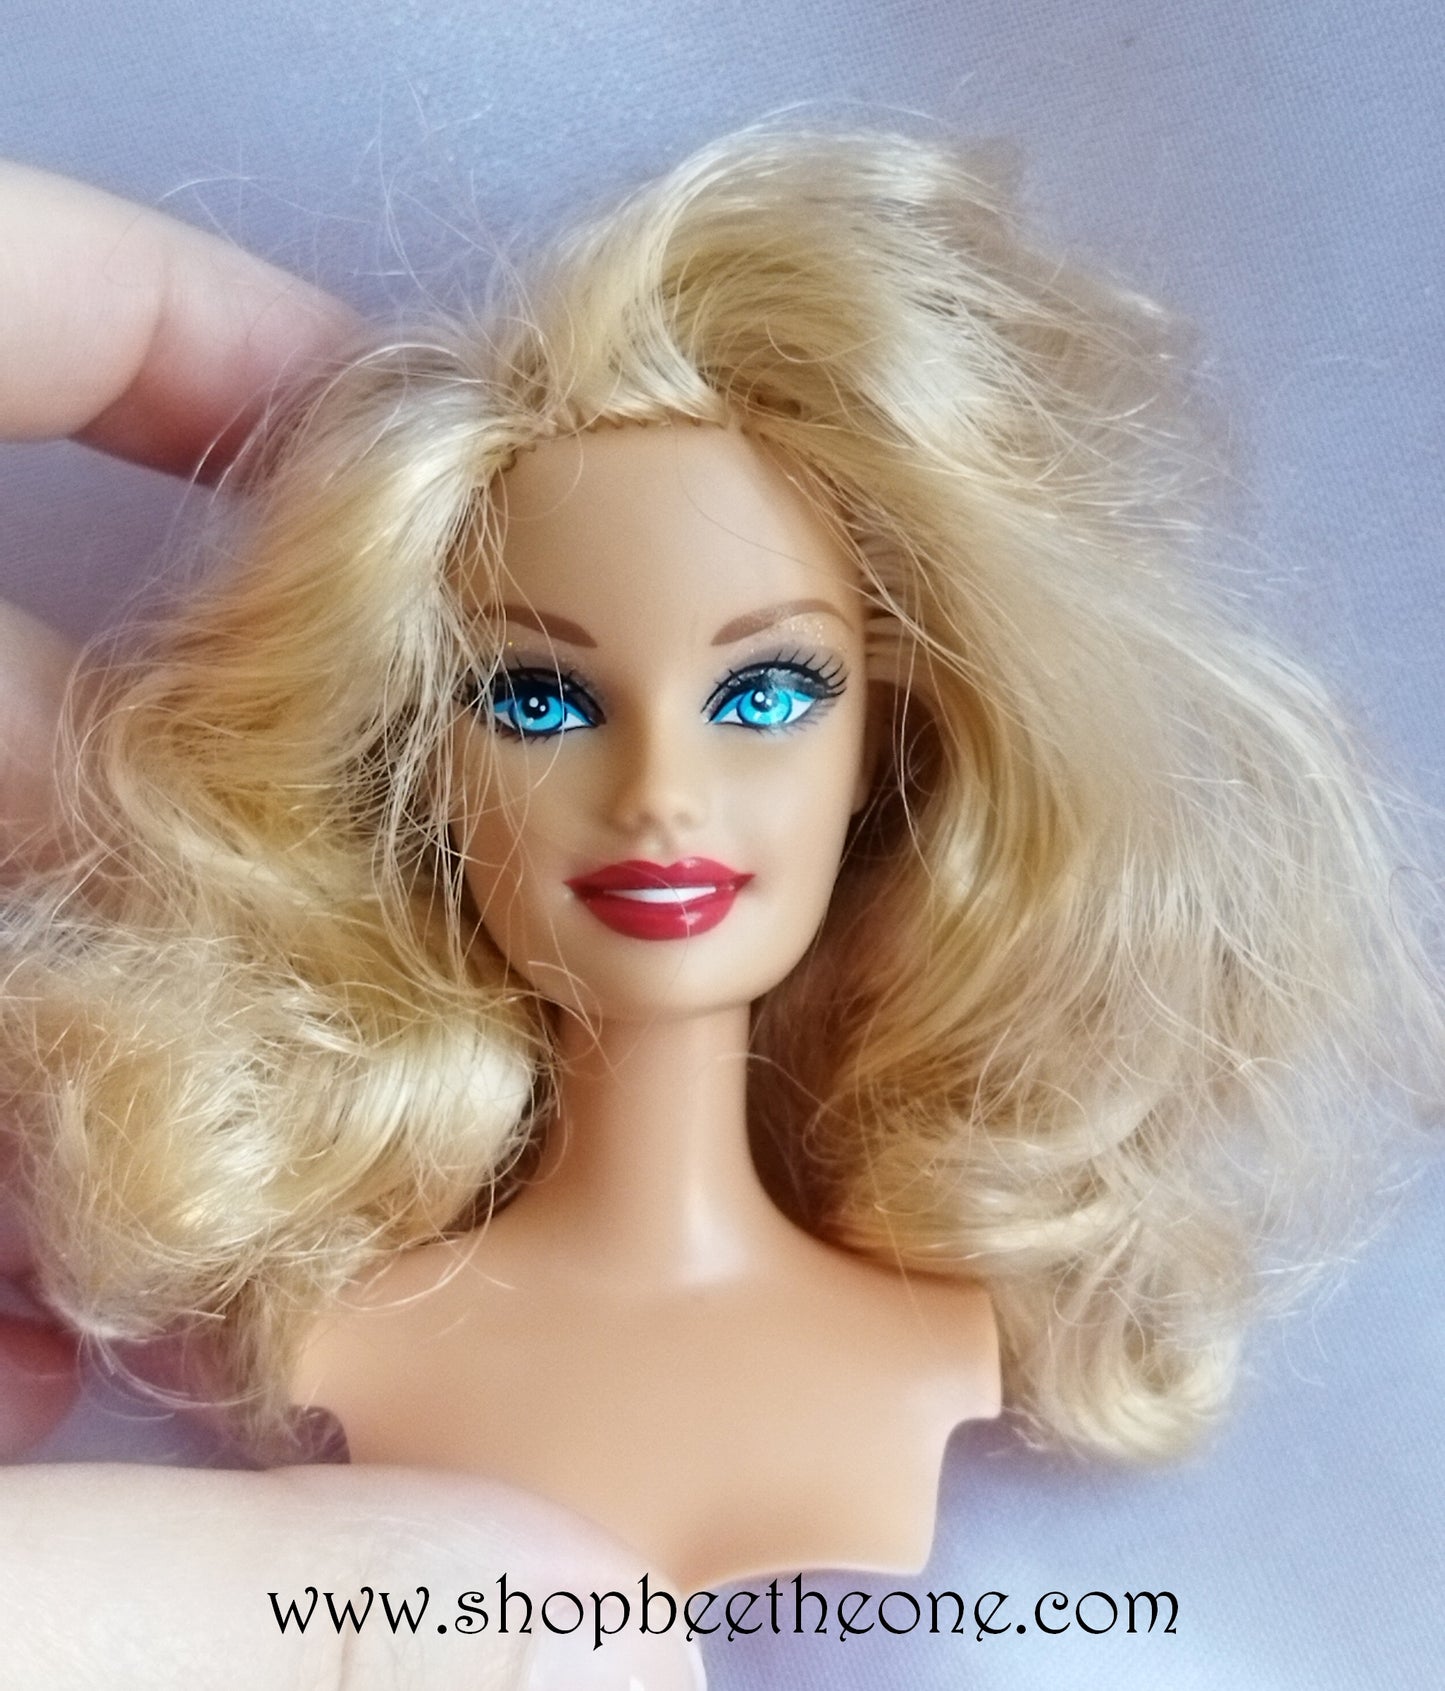 Barbie Fashionistas Swappin' Styles - Glam - Mattel 2010 - Tête et socle